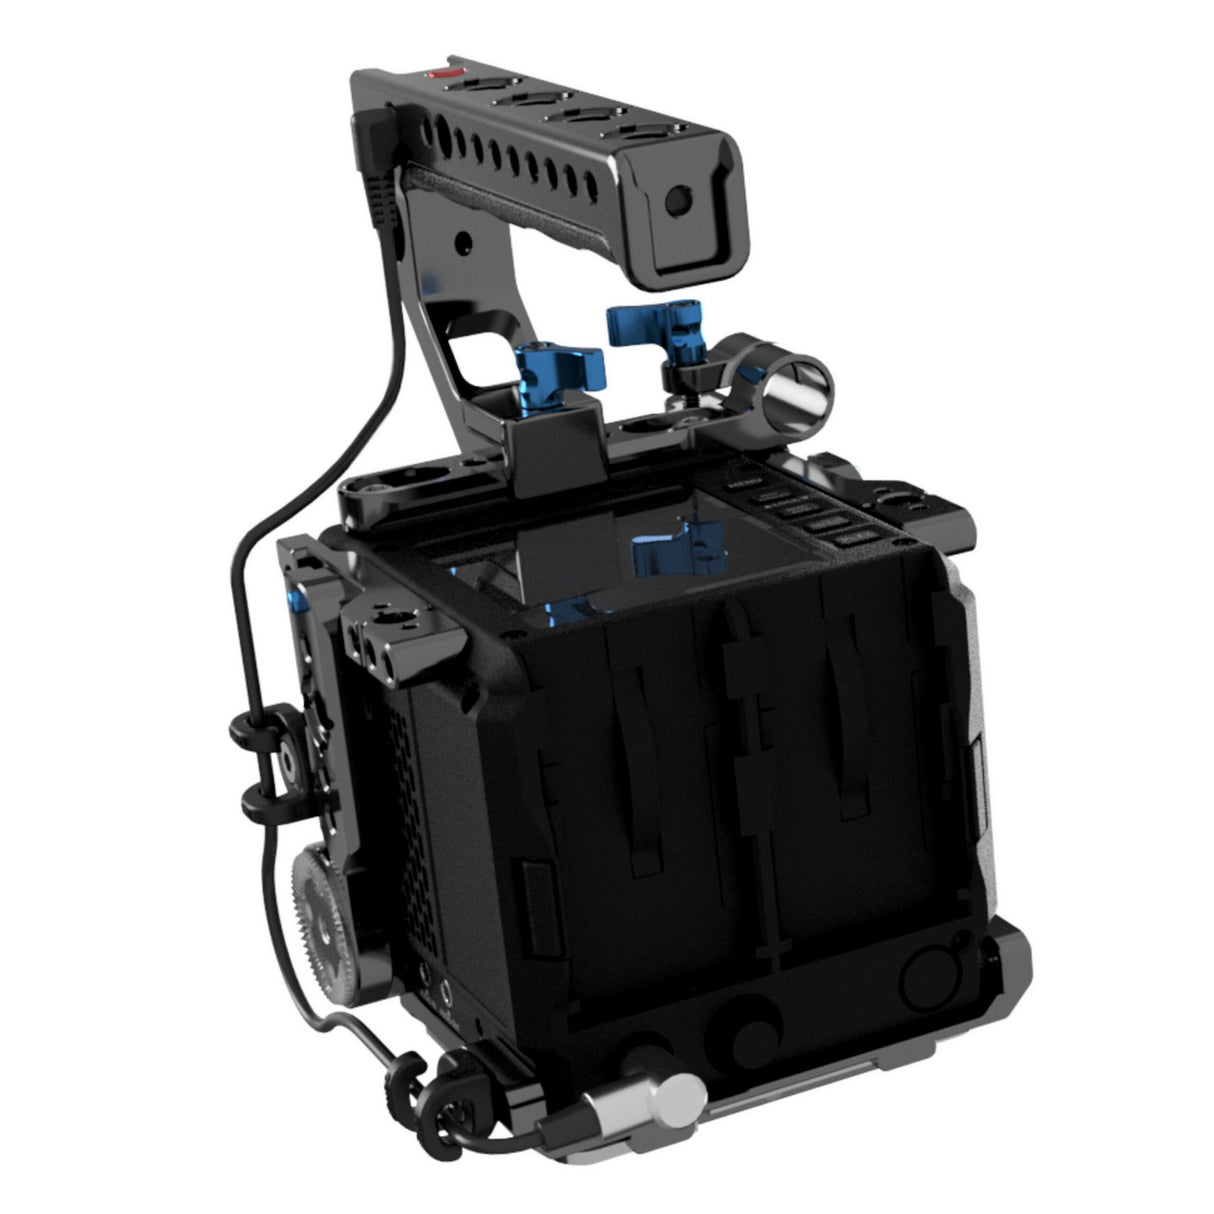 Kondor Blue KB-MT-5-Bk 1/4-20 Mondo Ties Cable Management Clips for Cameras, Raven Black 5-Pack